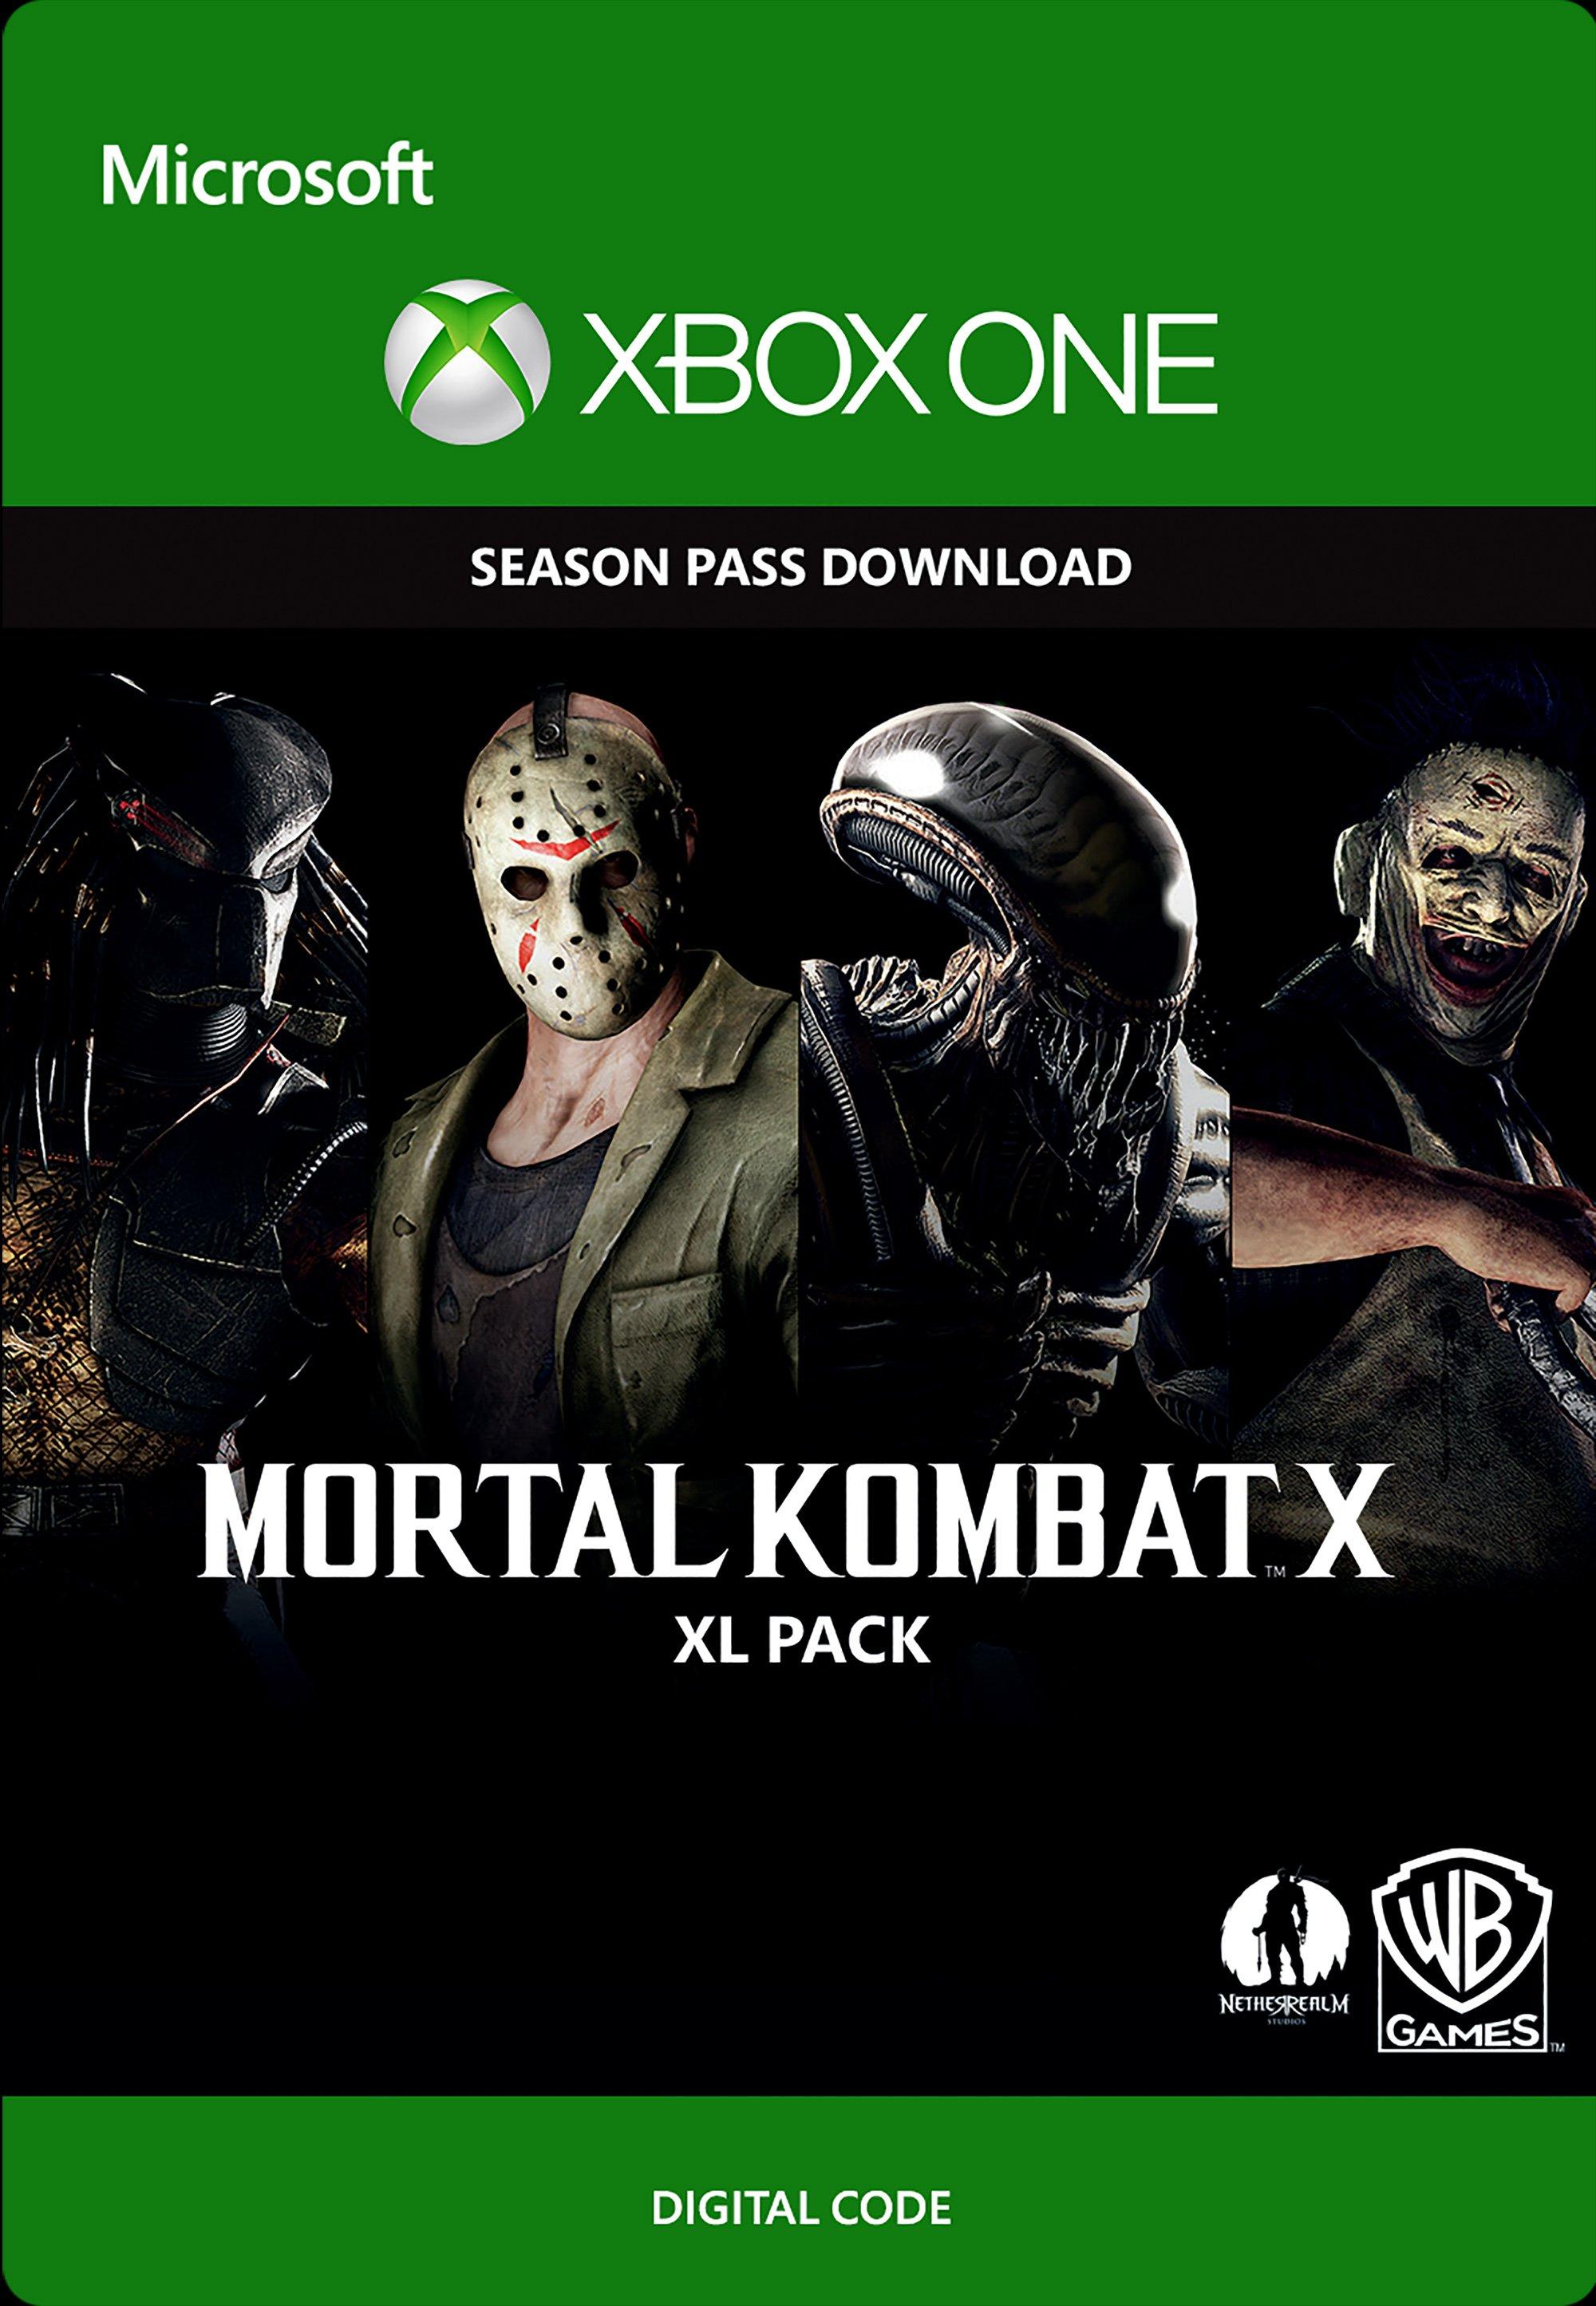 Mortal Kombat Online KOMBAT PASS DLC for PS3